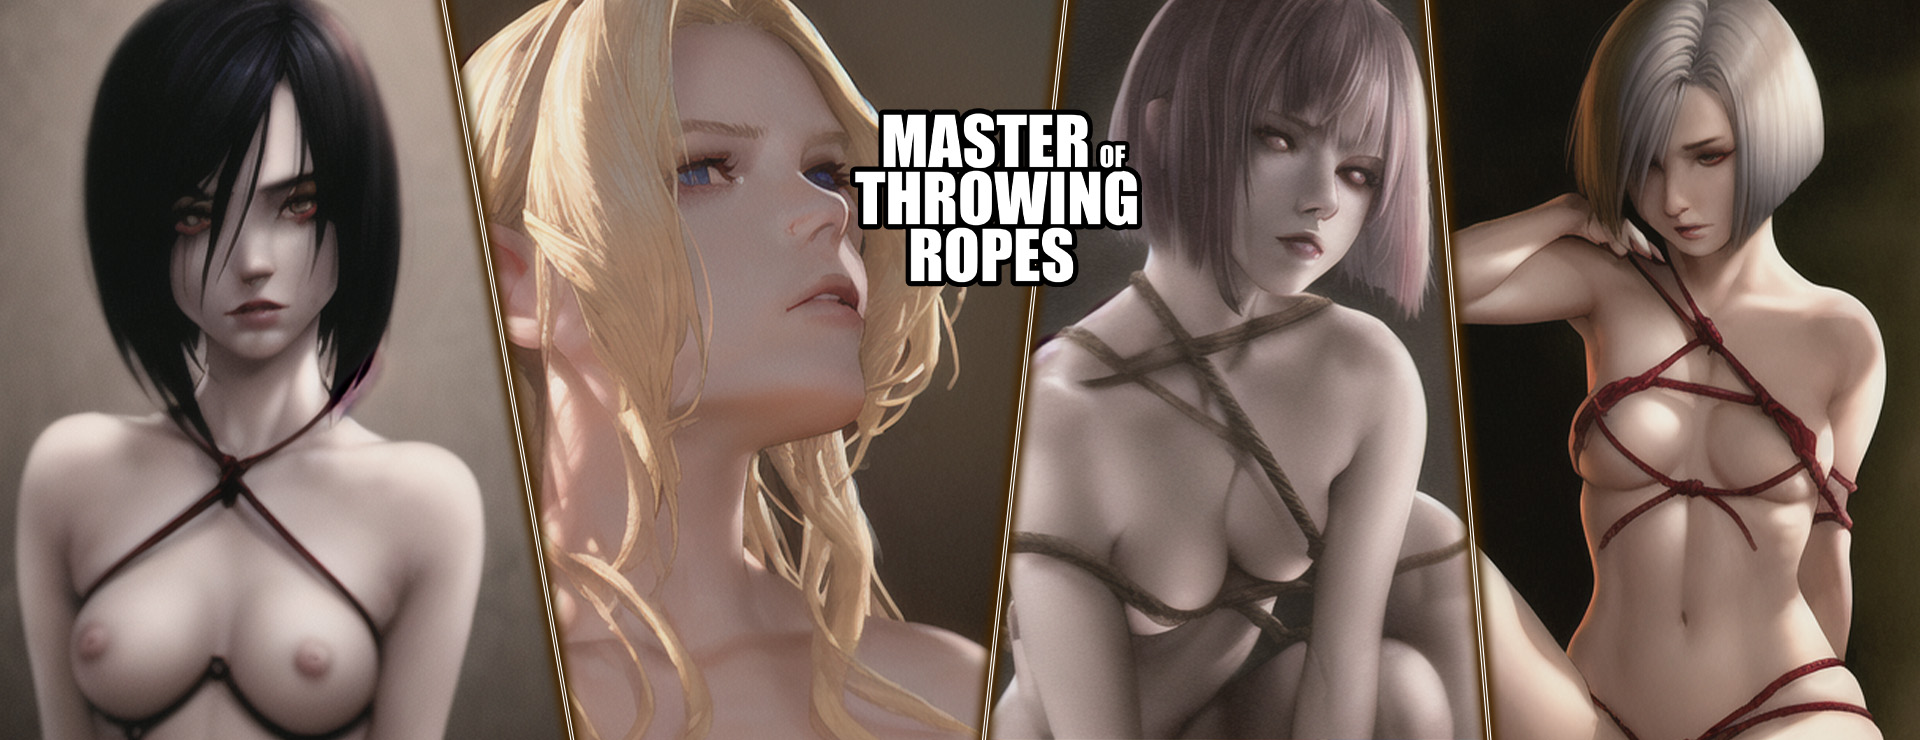 Master of Throwing Ropes - カジュアル ゲーム